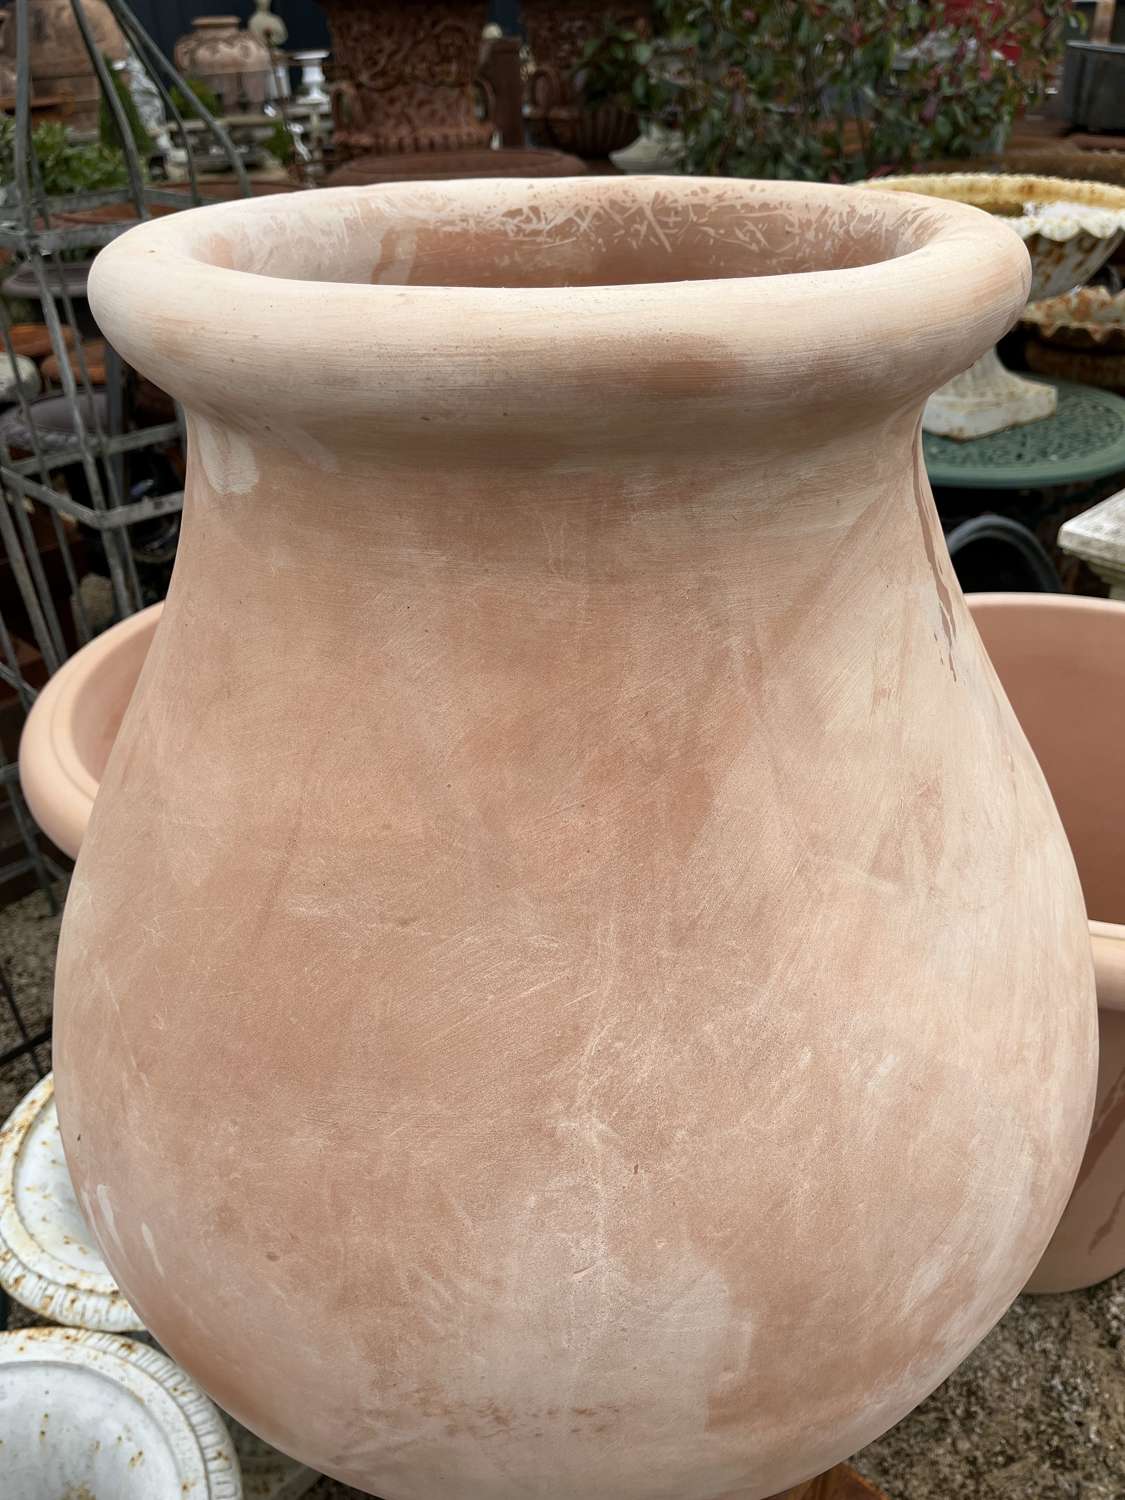 Terracotta Jar - Biot style terracotta pots